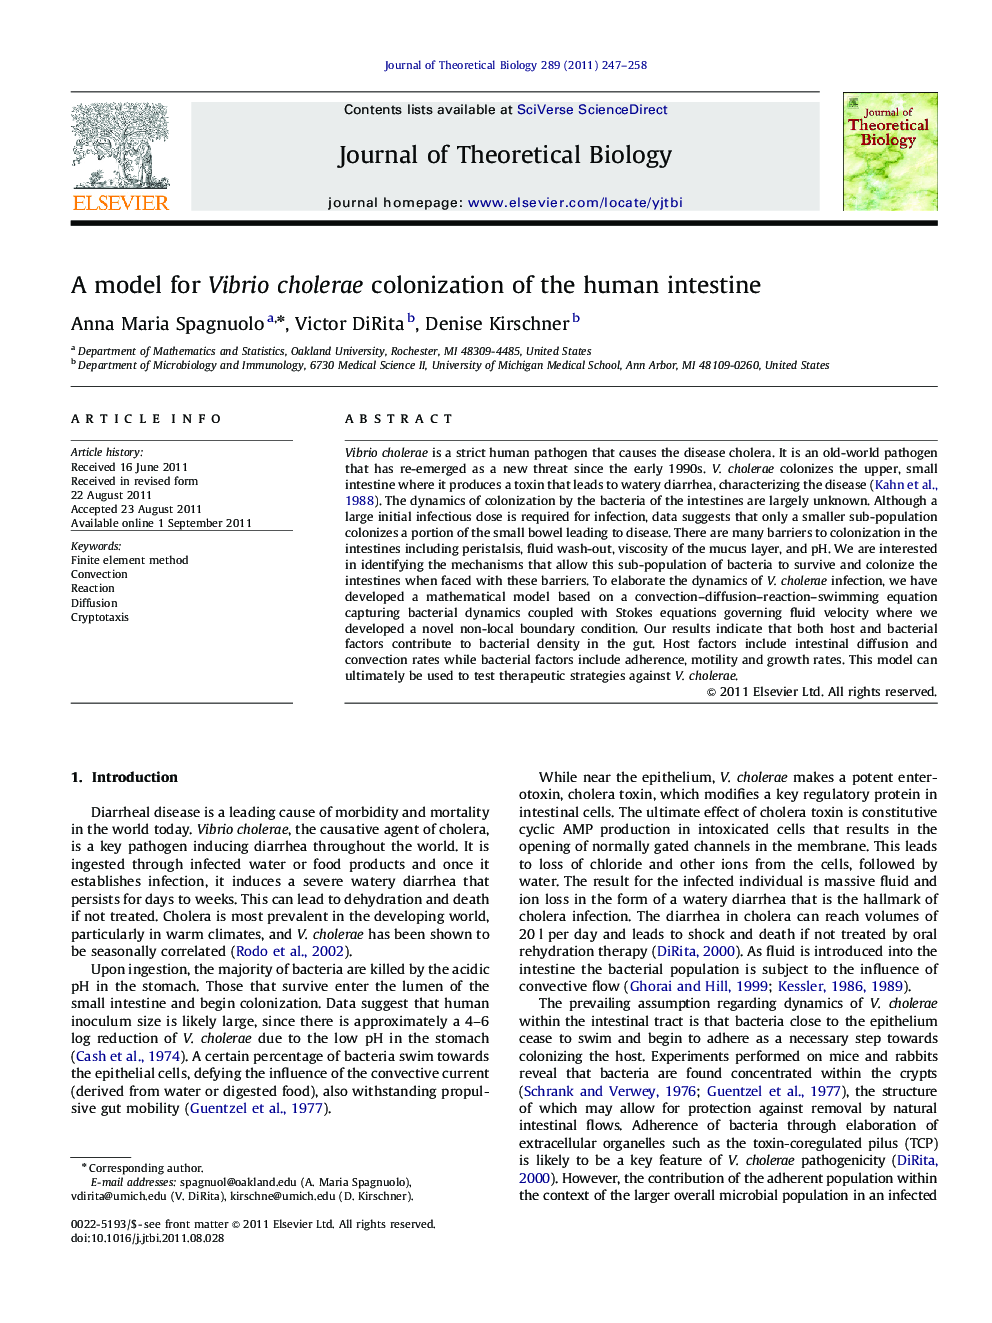 A model for Vibrio cholerae colonization of the human intestine